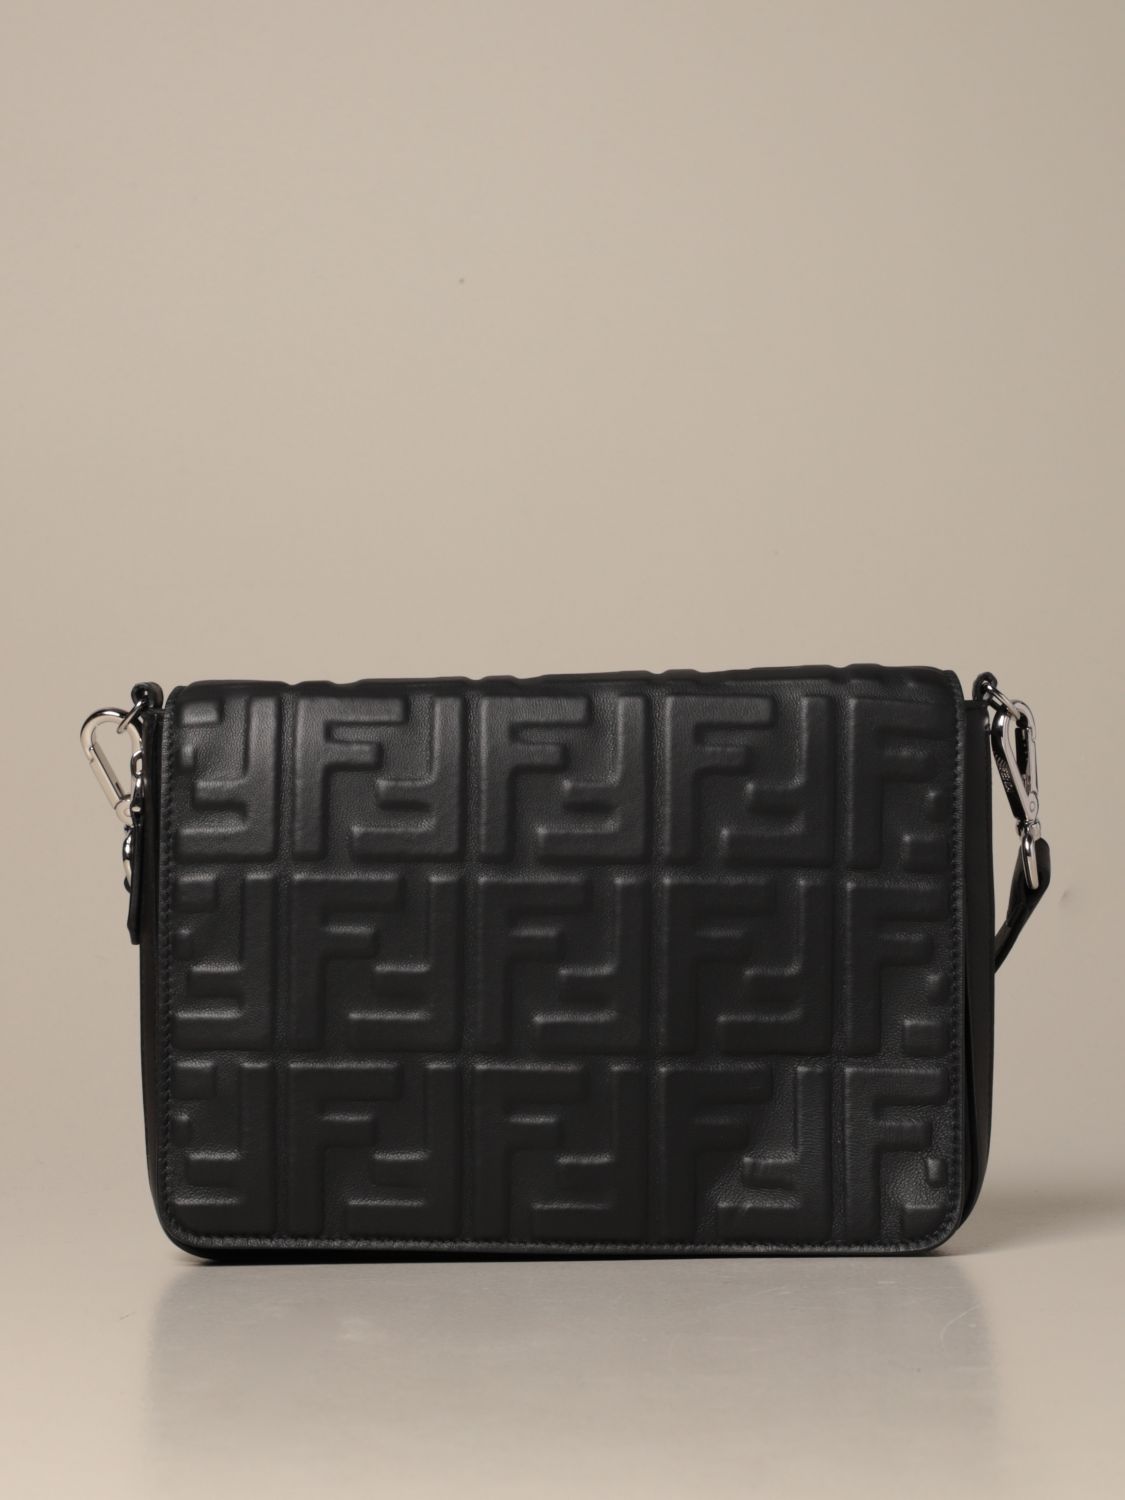 FENDI: leather cross body bag with embossed FF logo - Black | Fendi ...